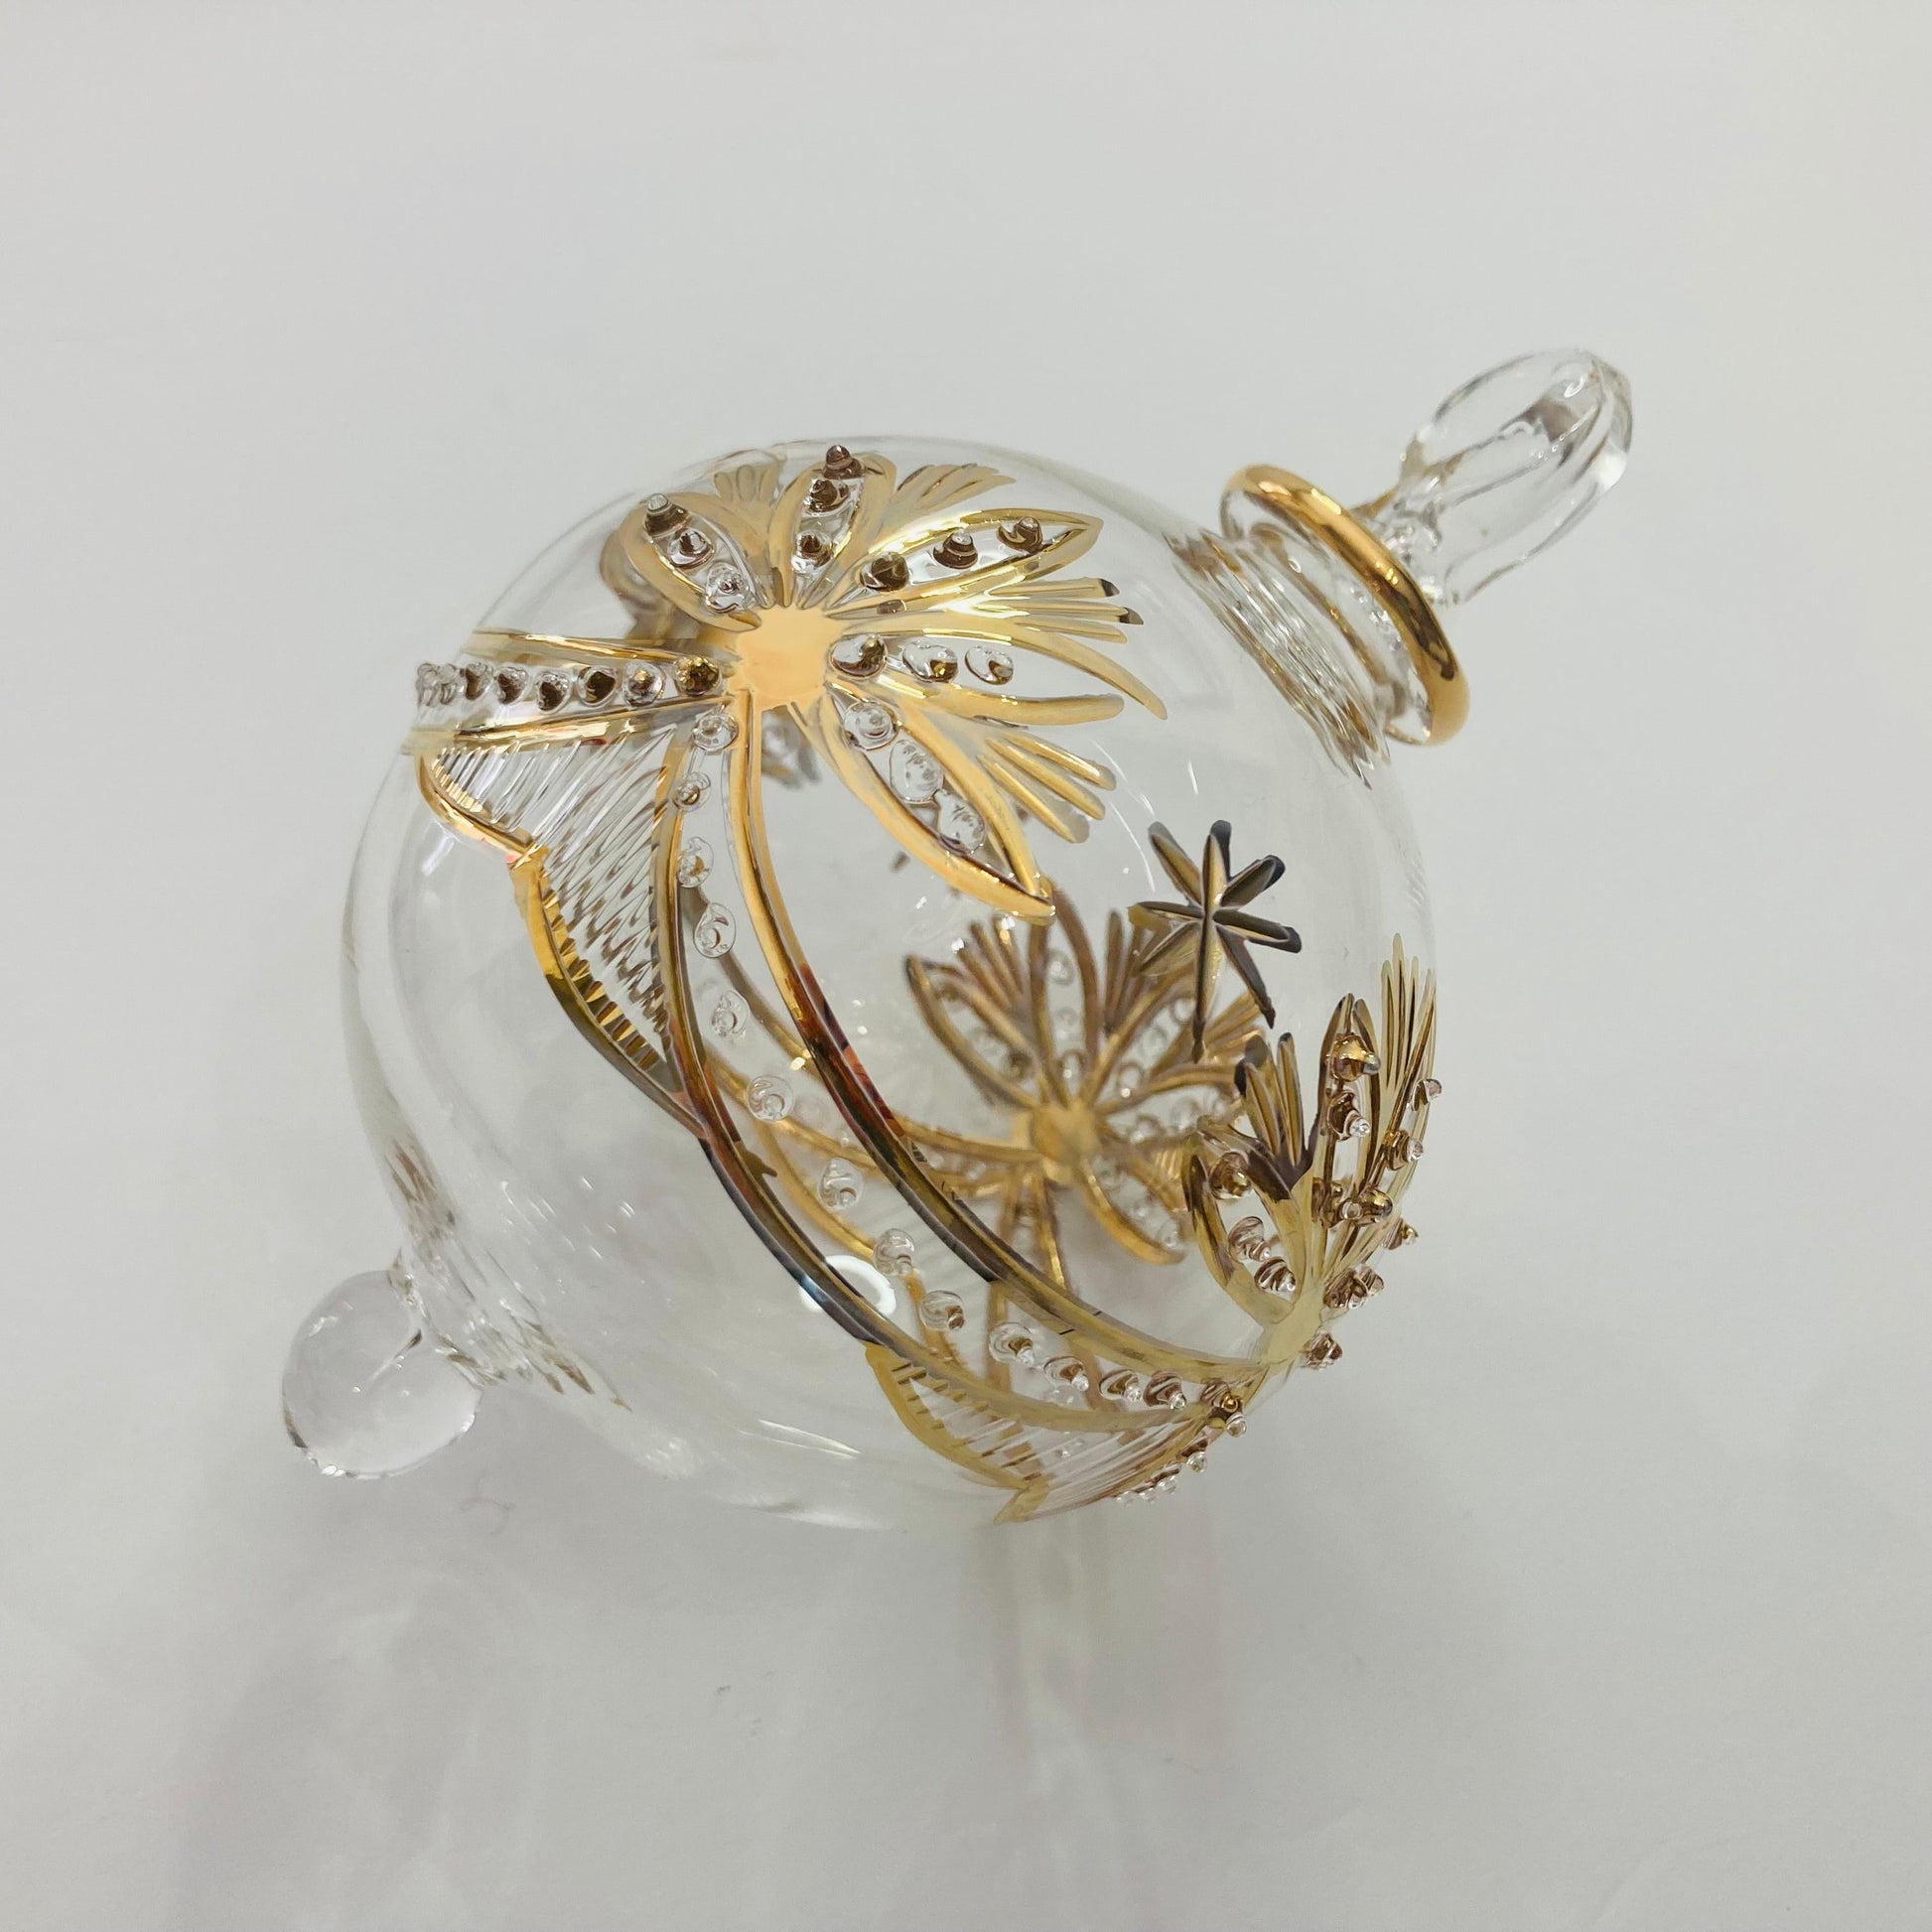 Blown Glass Ornament - Lotus Garland Gold